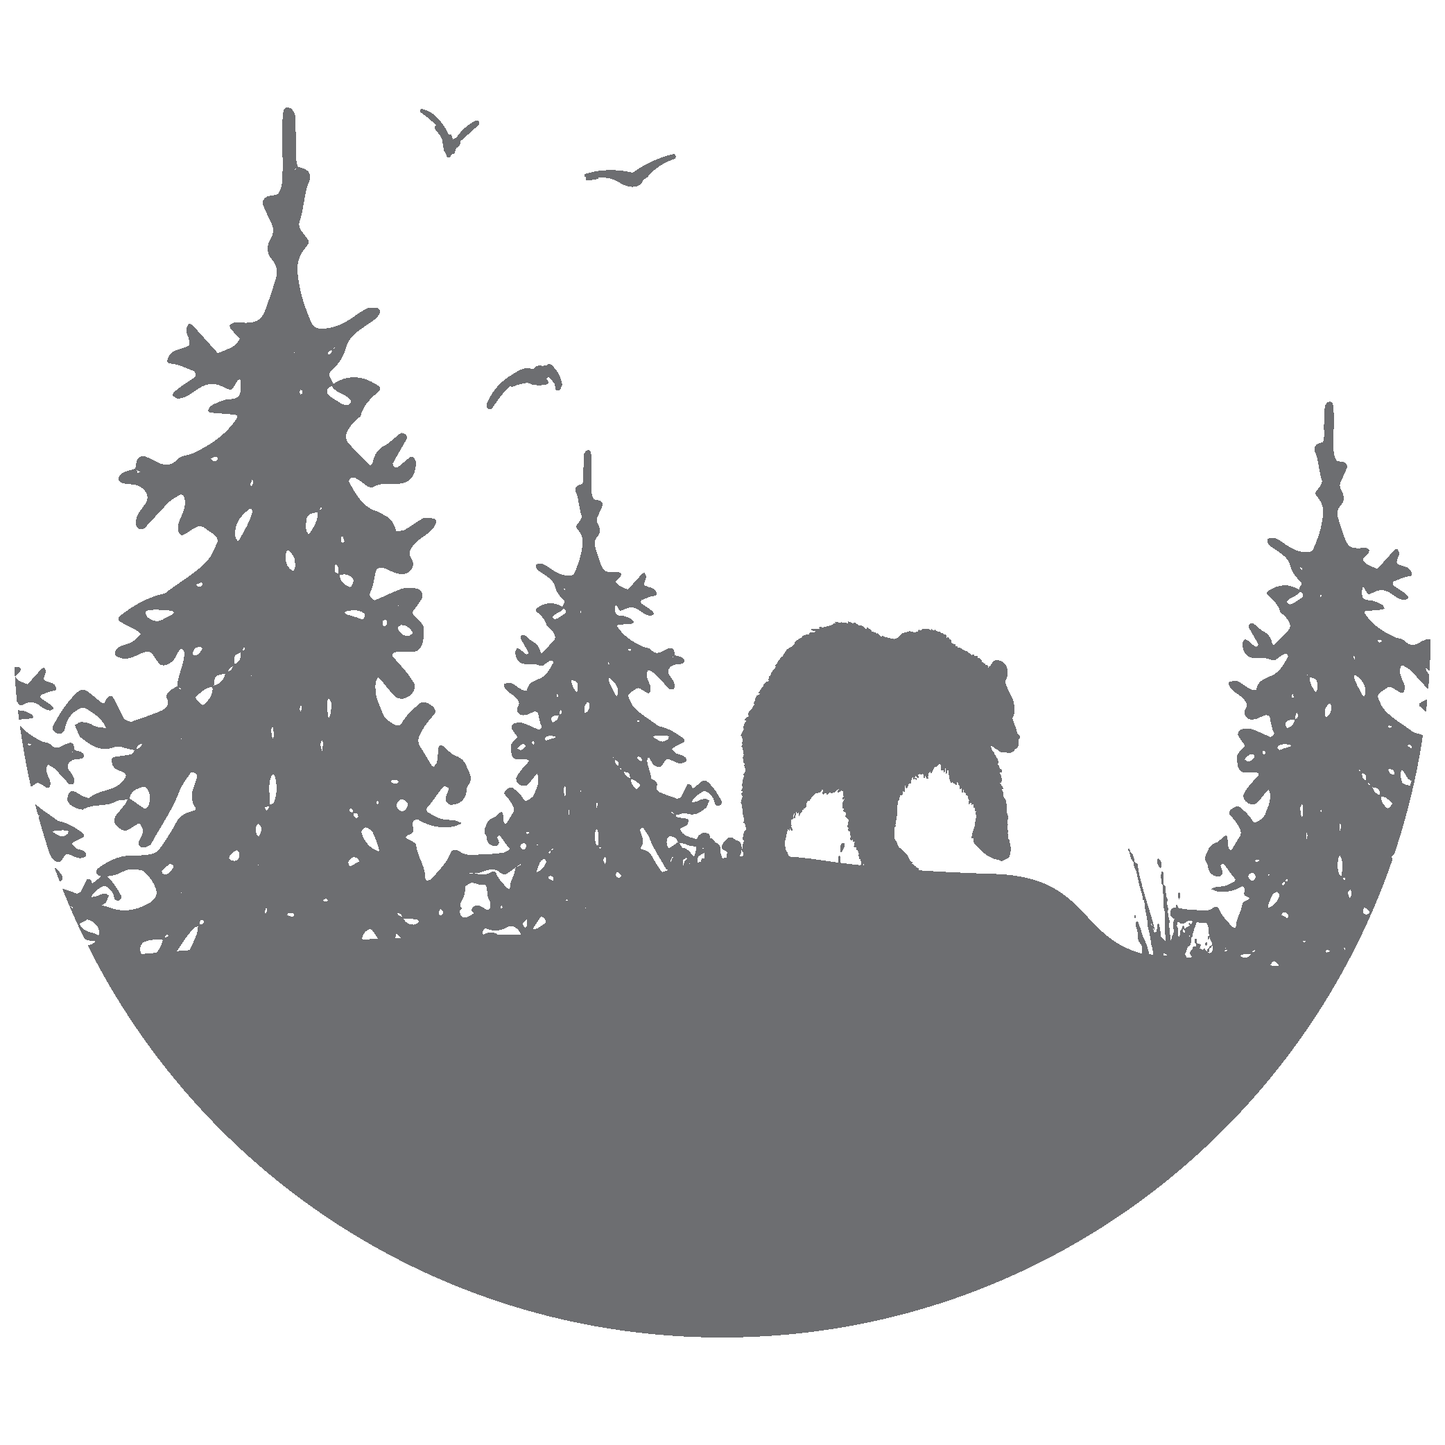 ShopVinylDesignStore.com Bear in Half Moon with Forest Scenery Wide Shop Vinyl Design decals stickers